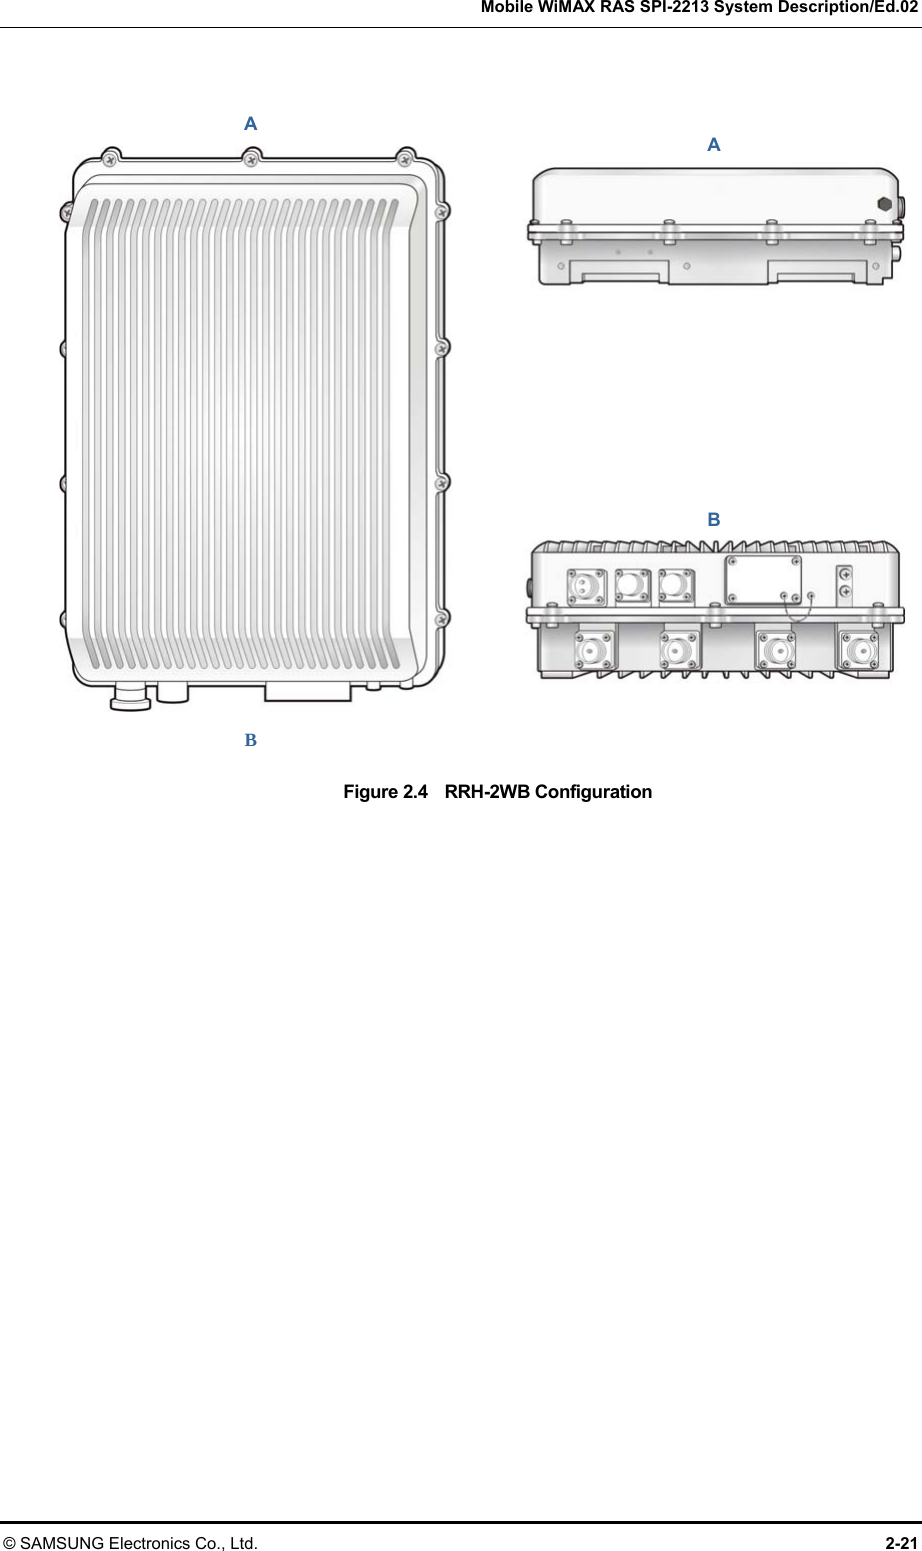   Mobile WiMAX RAS SPI-2213 System Description/Ed.02 © SAMSUNG Electronics Co., Ltd.  2-21  Figure 2.4    RRH-2WB Configuration B A B A 